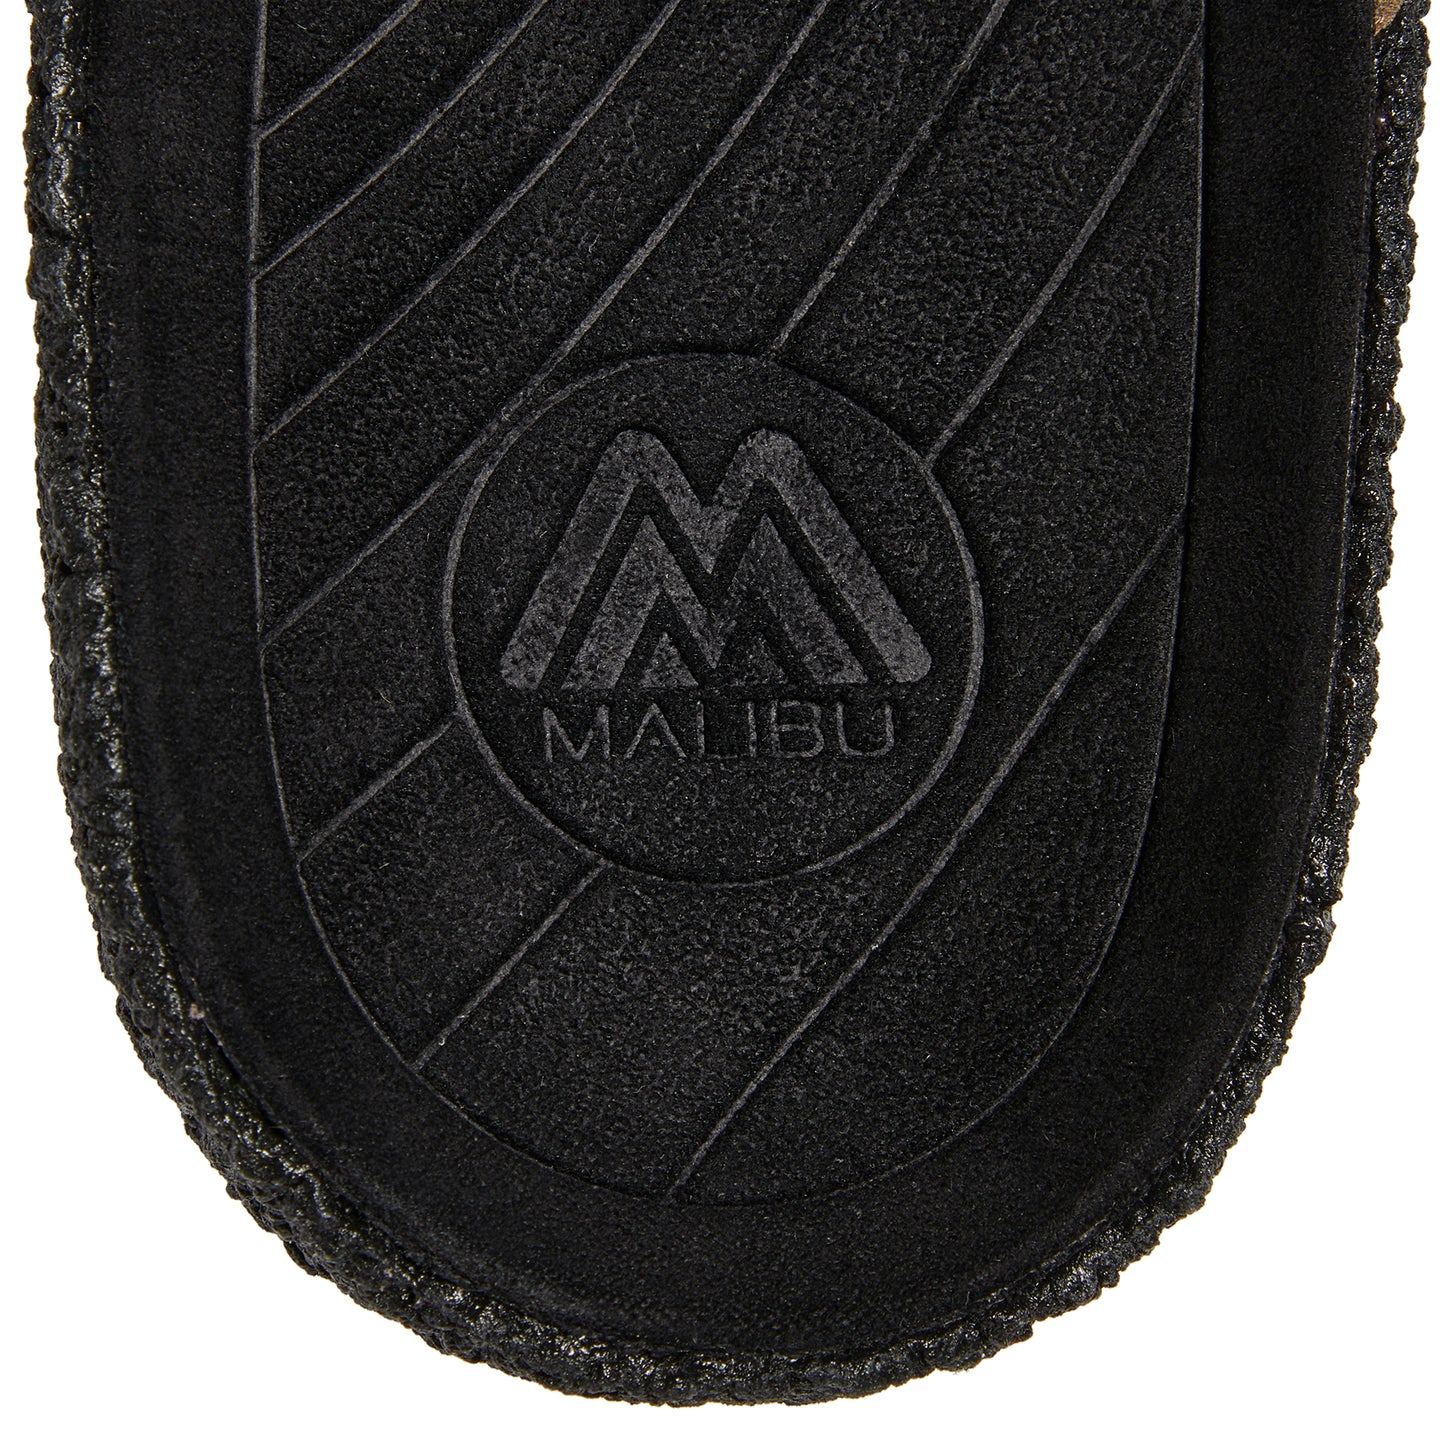 Malibu Sandals Thunderbird  (Crepe Black/Beige/Black)